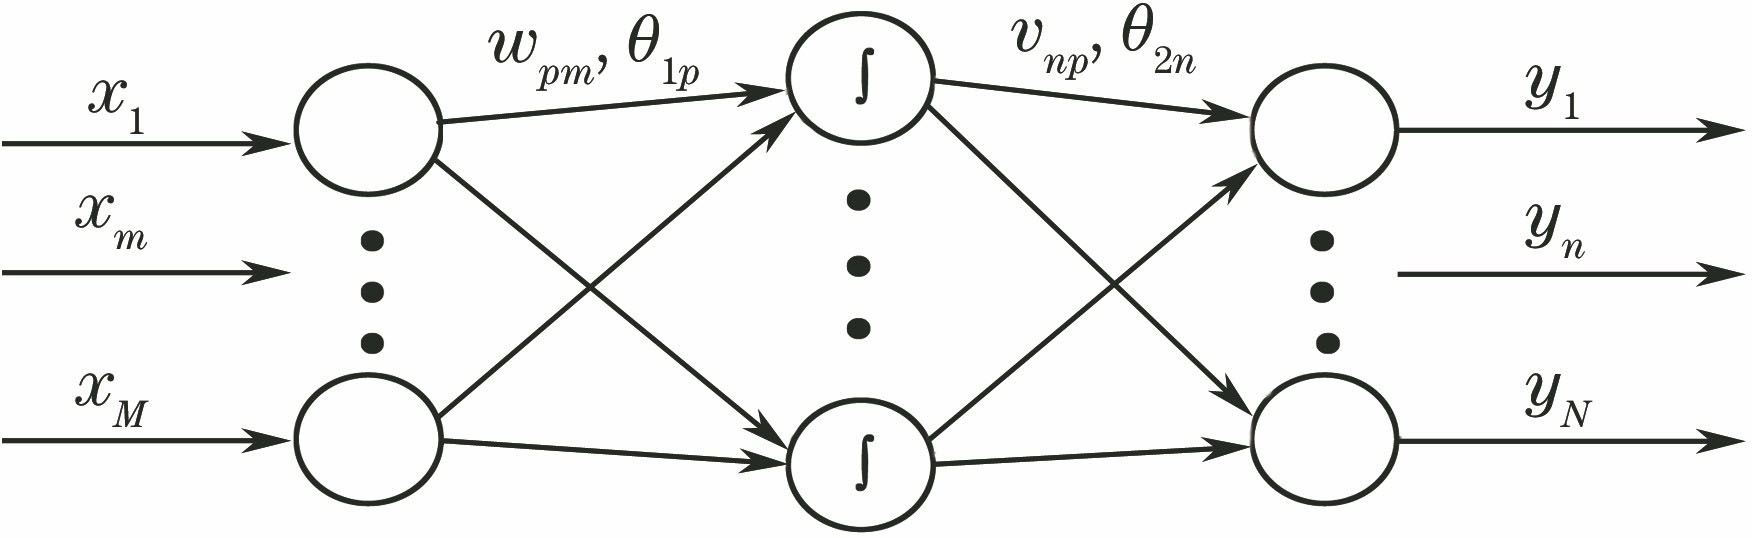 BRBP neural network structure